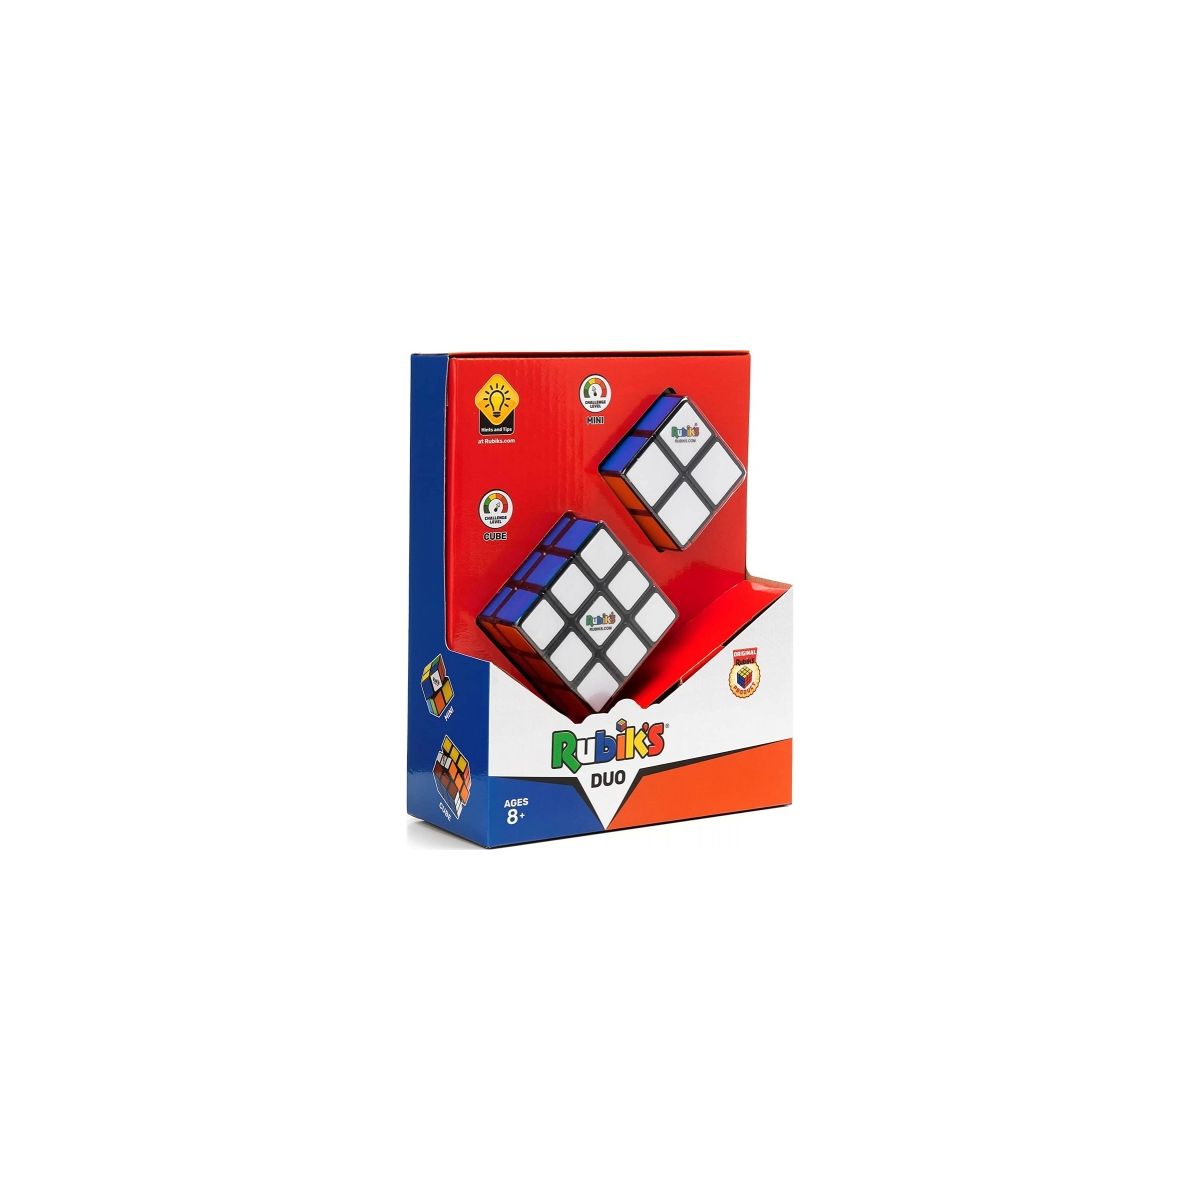 Układanka Spin Master Kostka Rubik duo pack (6064009)